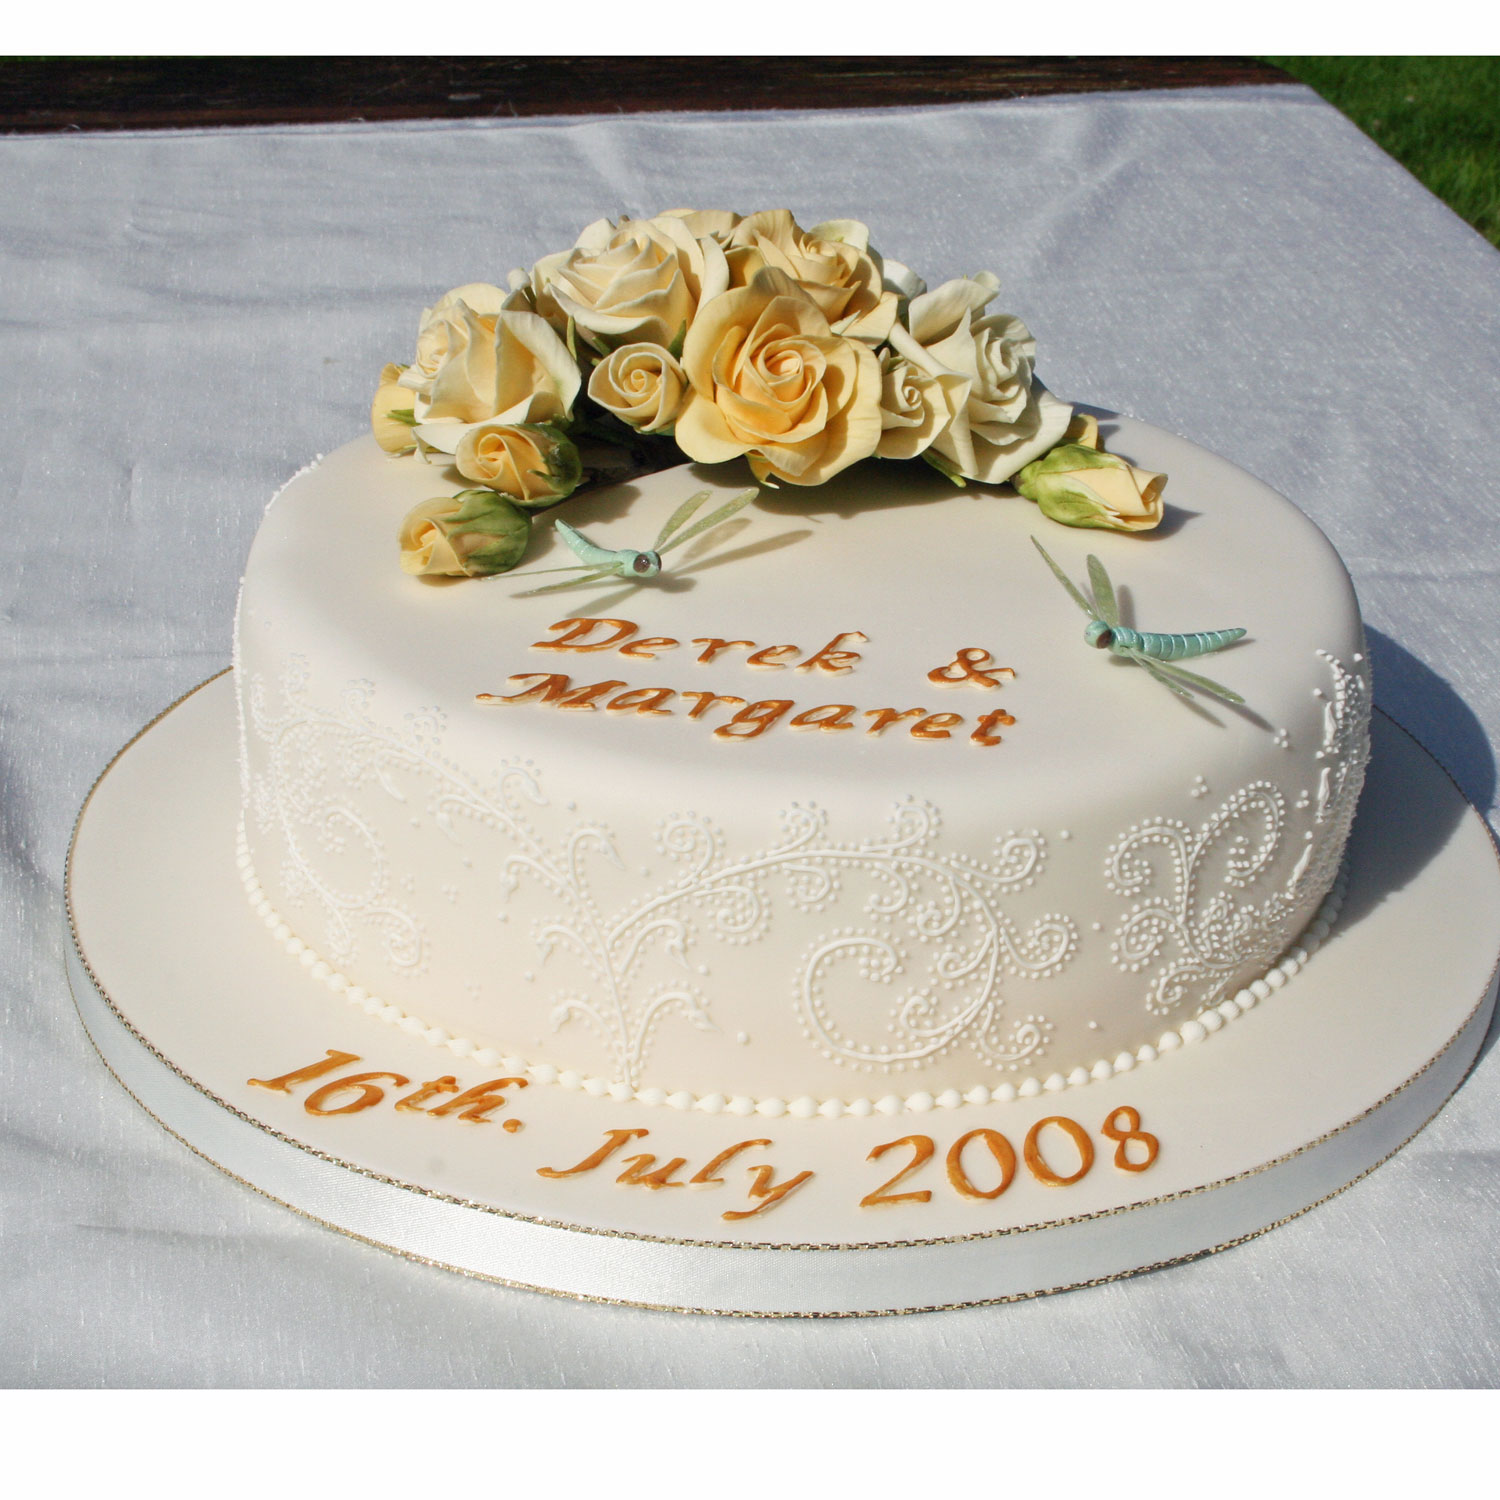 Golden wedding cakes uk